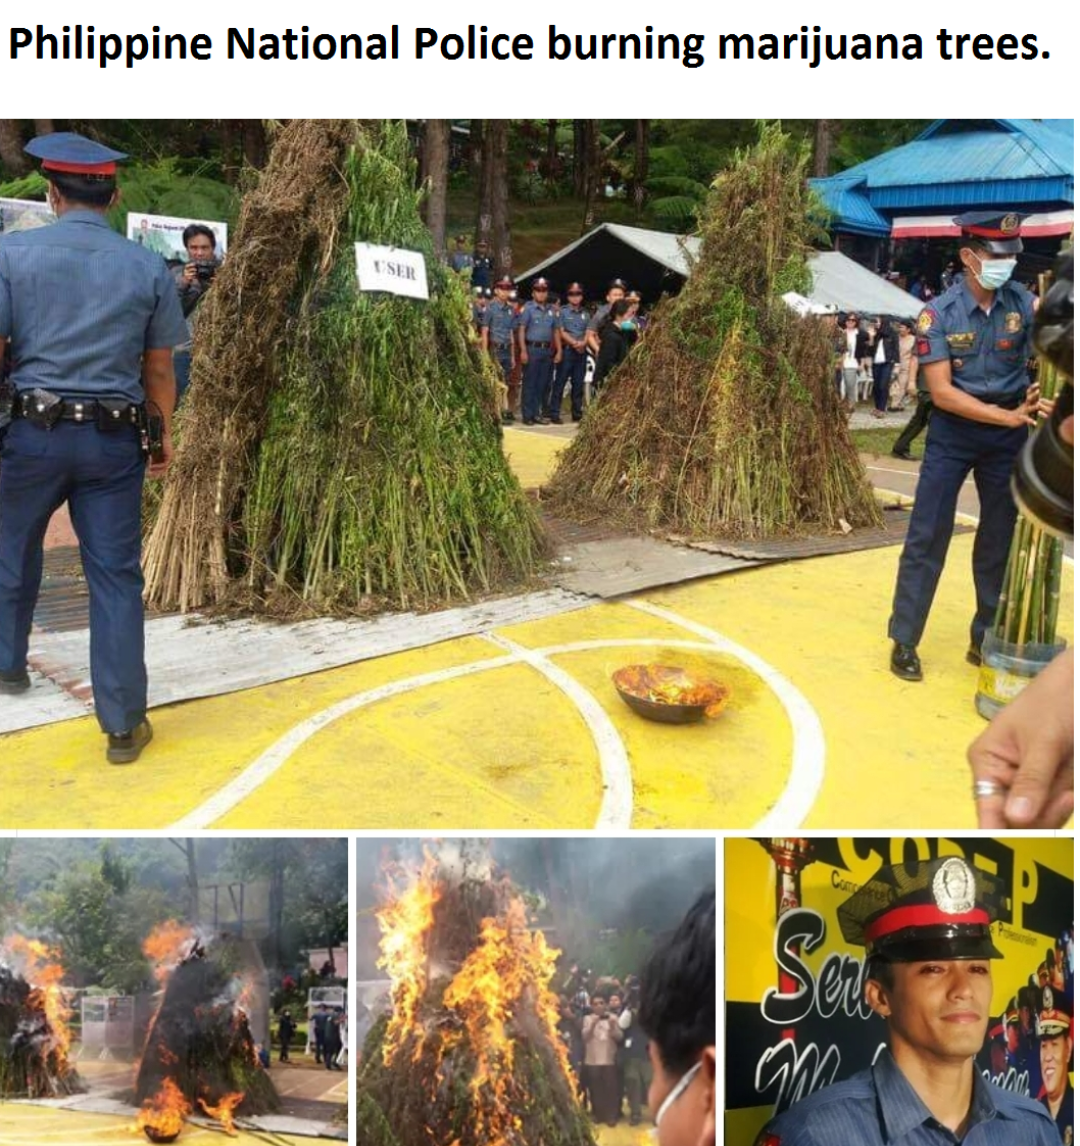 marijuana burning pnp - Philippine National Police burning marijuana trees. Serlei om